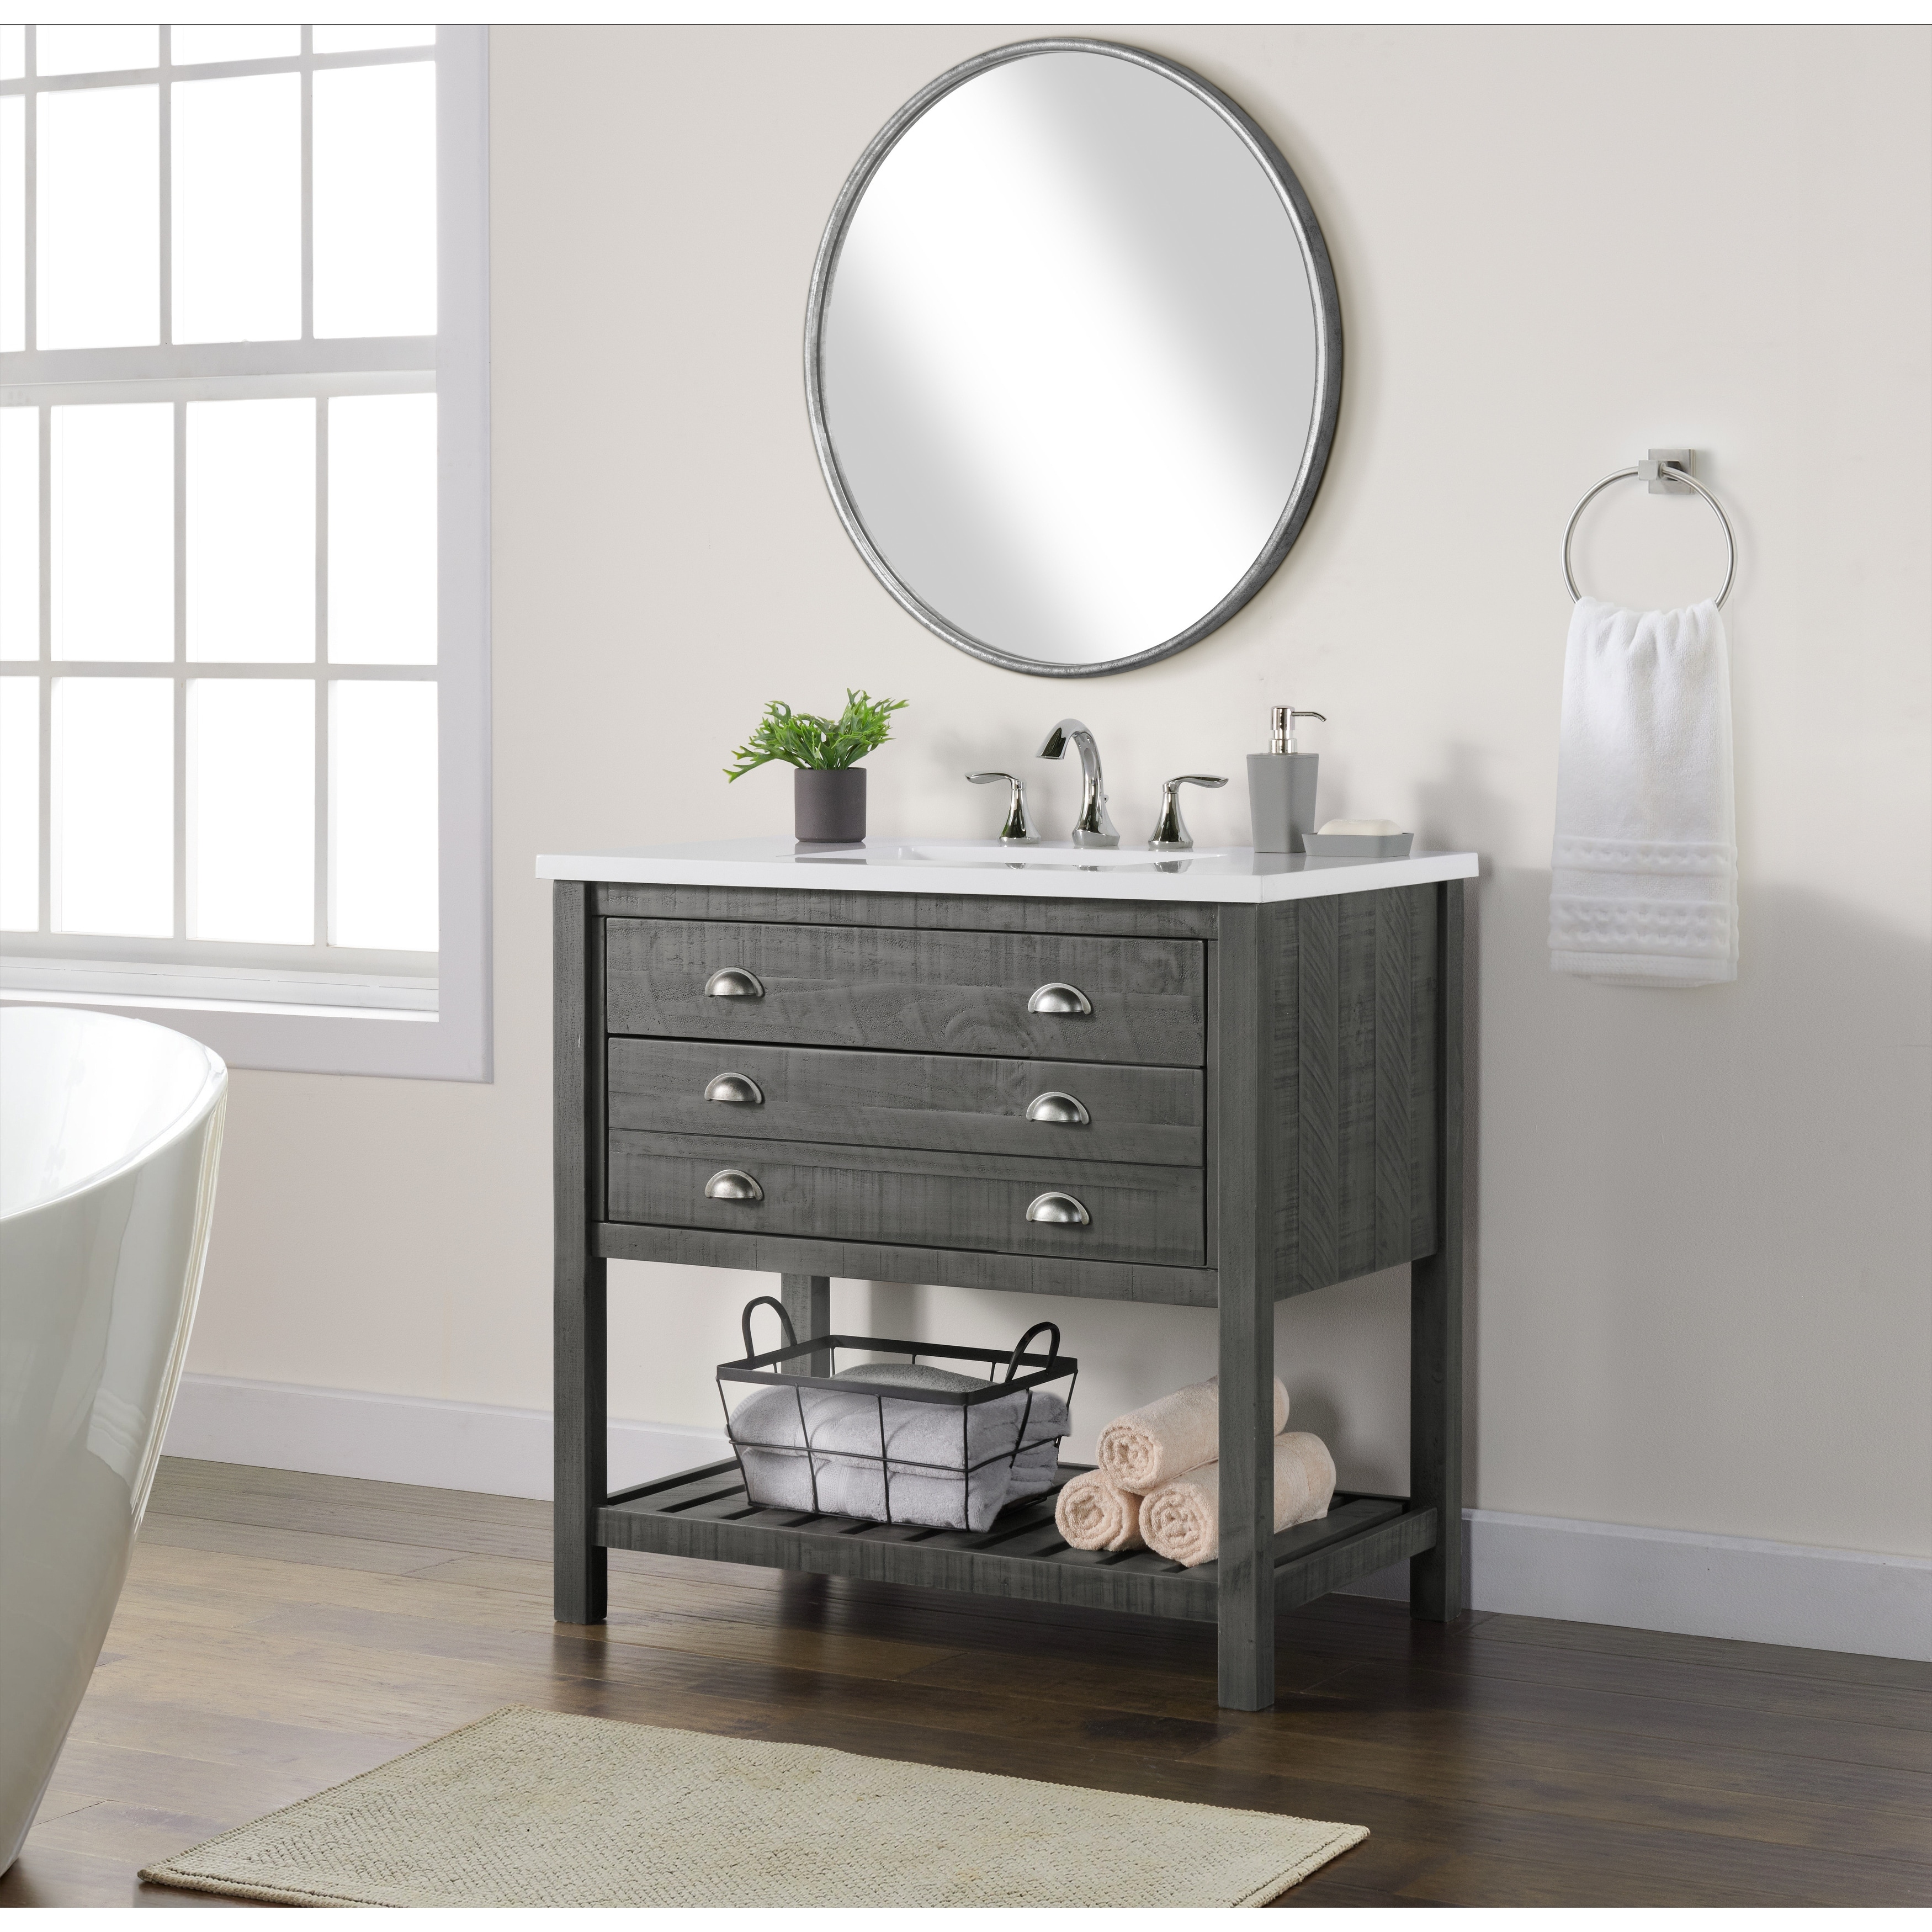 Live Edge Wood Bathroom Vanity Shelf, Bespoke Solid Oak Wood Wash